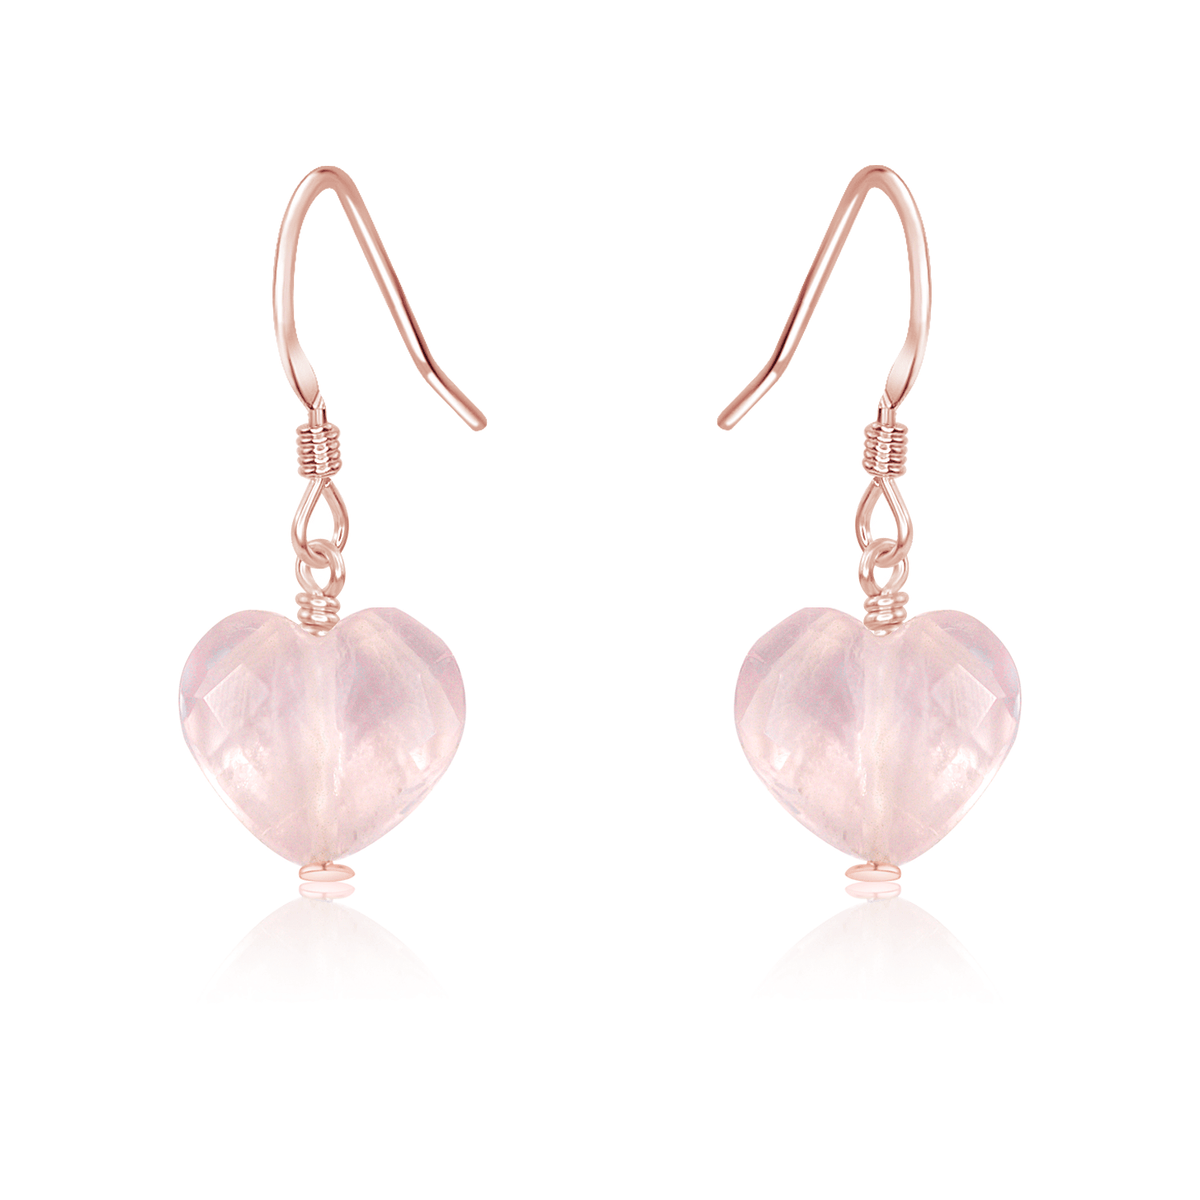 Rose Quartz Crystal Heart Dangle Earrings - Rose Quartz Crystal Heart Dangle Earrings - 14k Rose Gold Fill - Luna Tide Handmade Crystal Jewellery